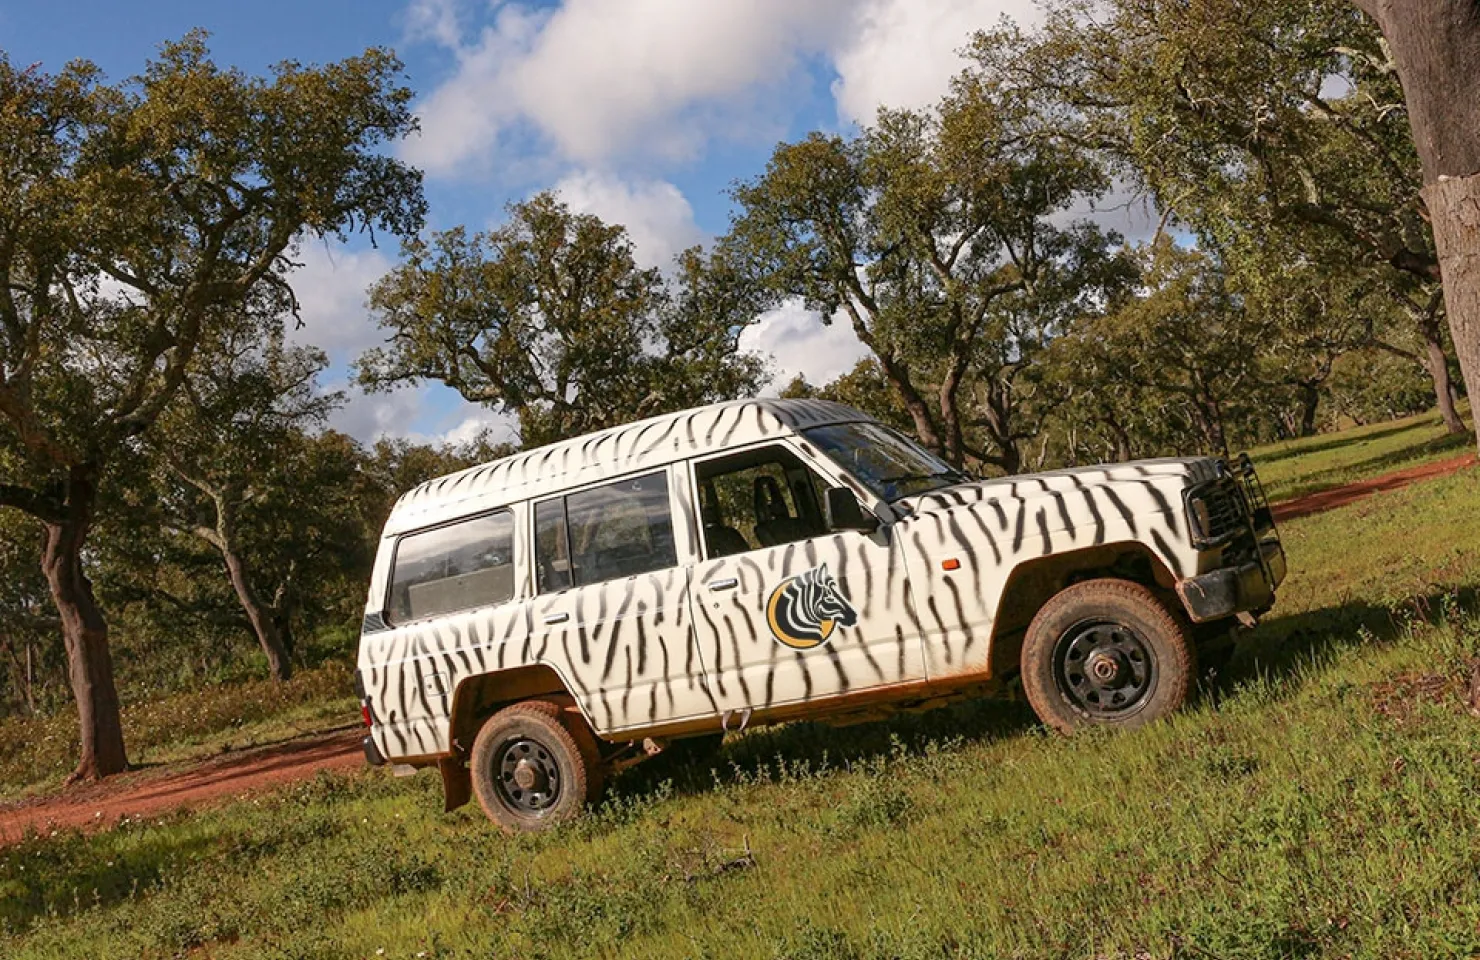 Full-Day Jeep Safari Adventure by Zebra Safari - Best Activities in Albufeira